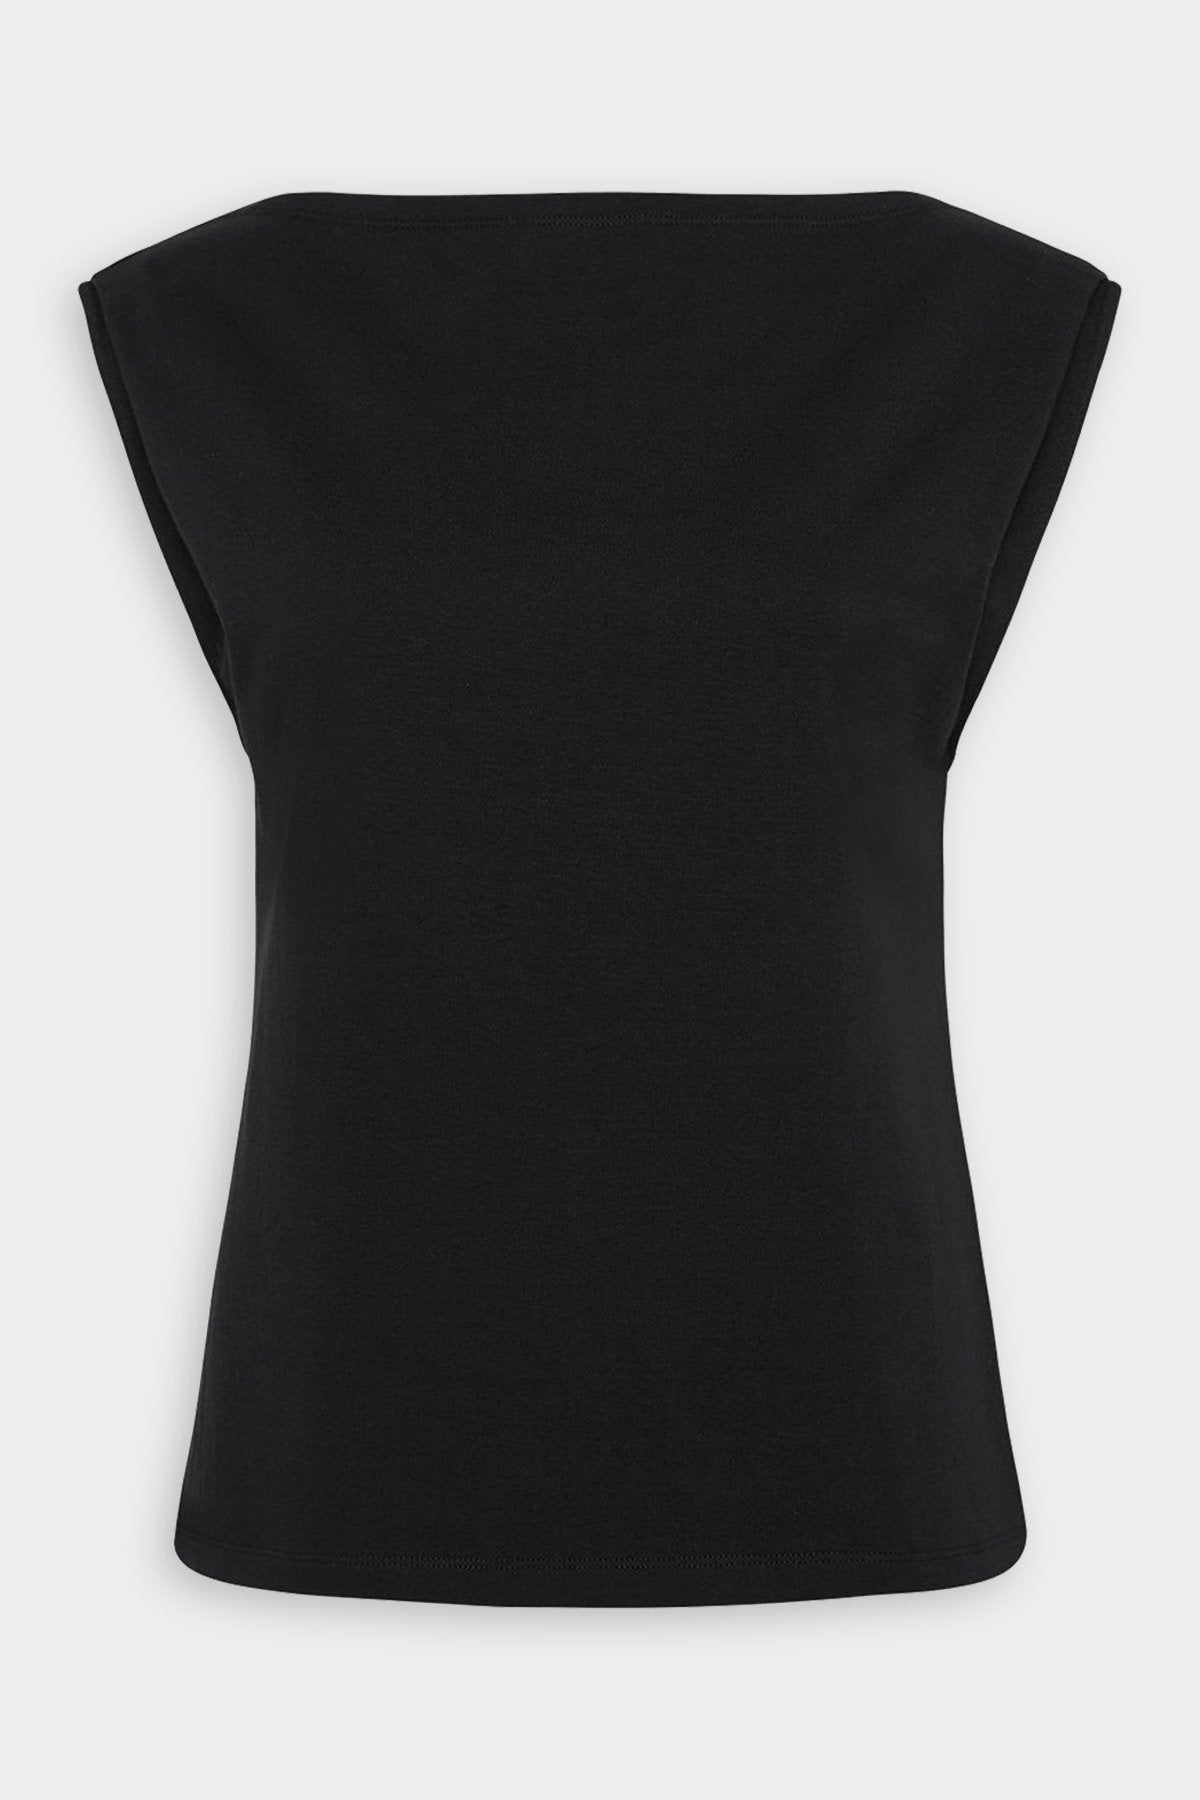 Tuck Shoulder Tee Top in Black - shop-olivia.com